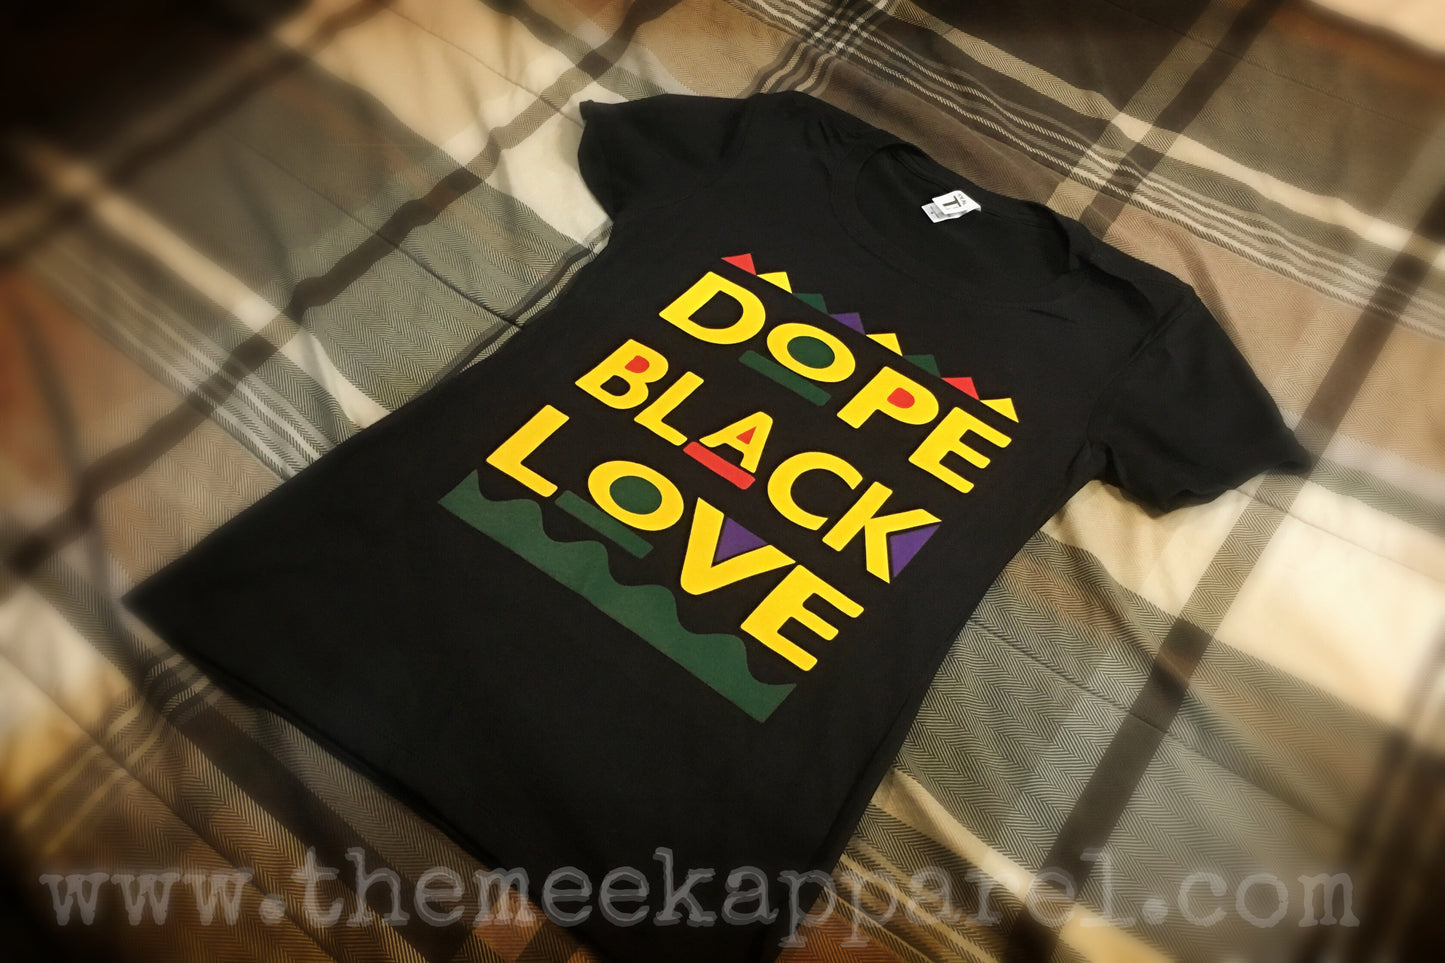 BLM - Black Dope Love Shirt